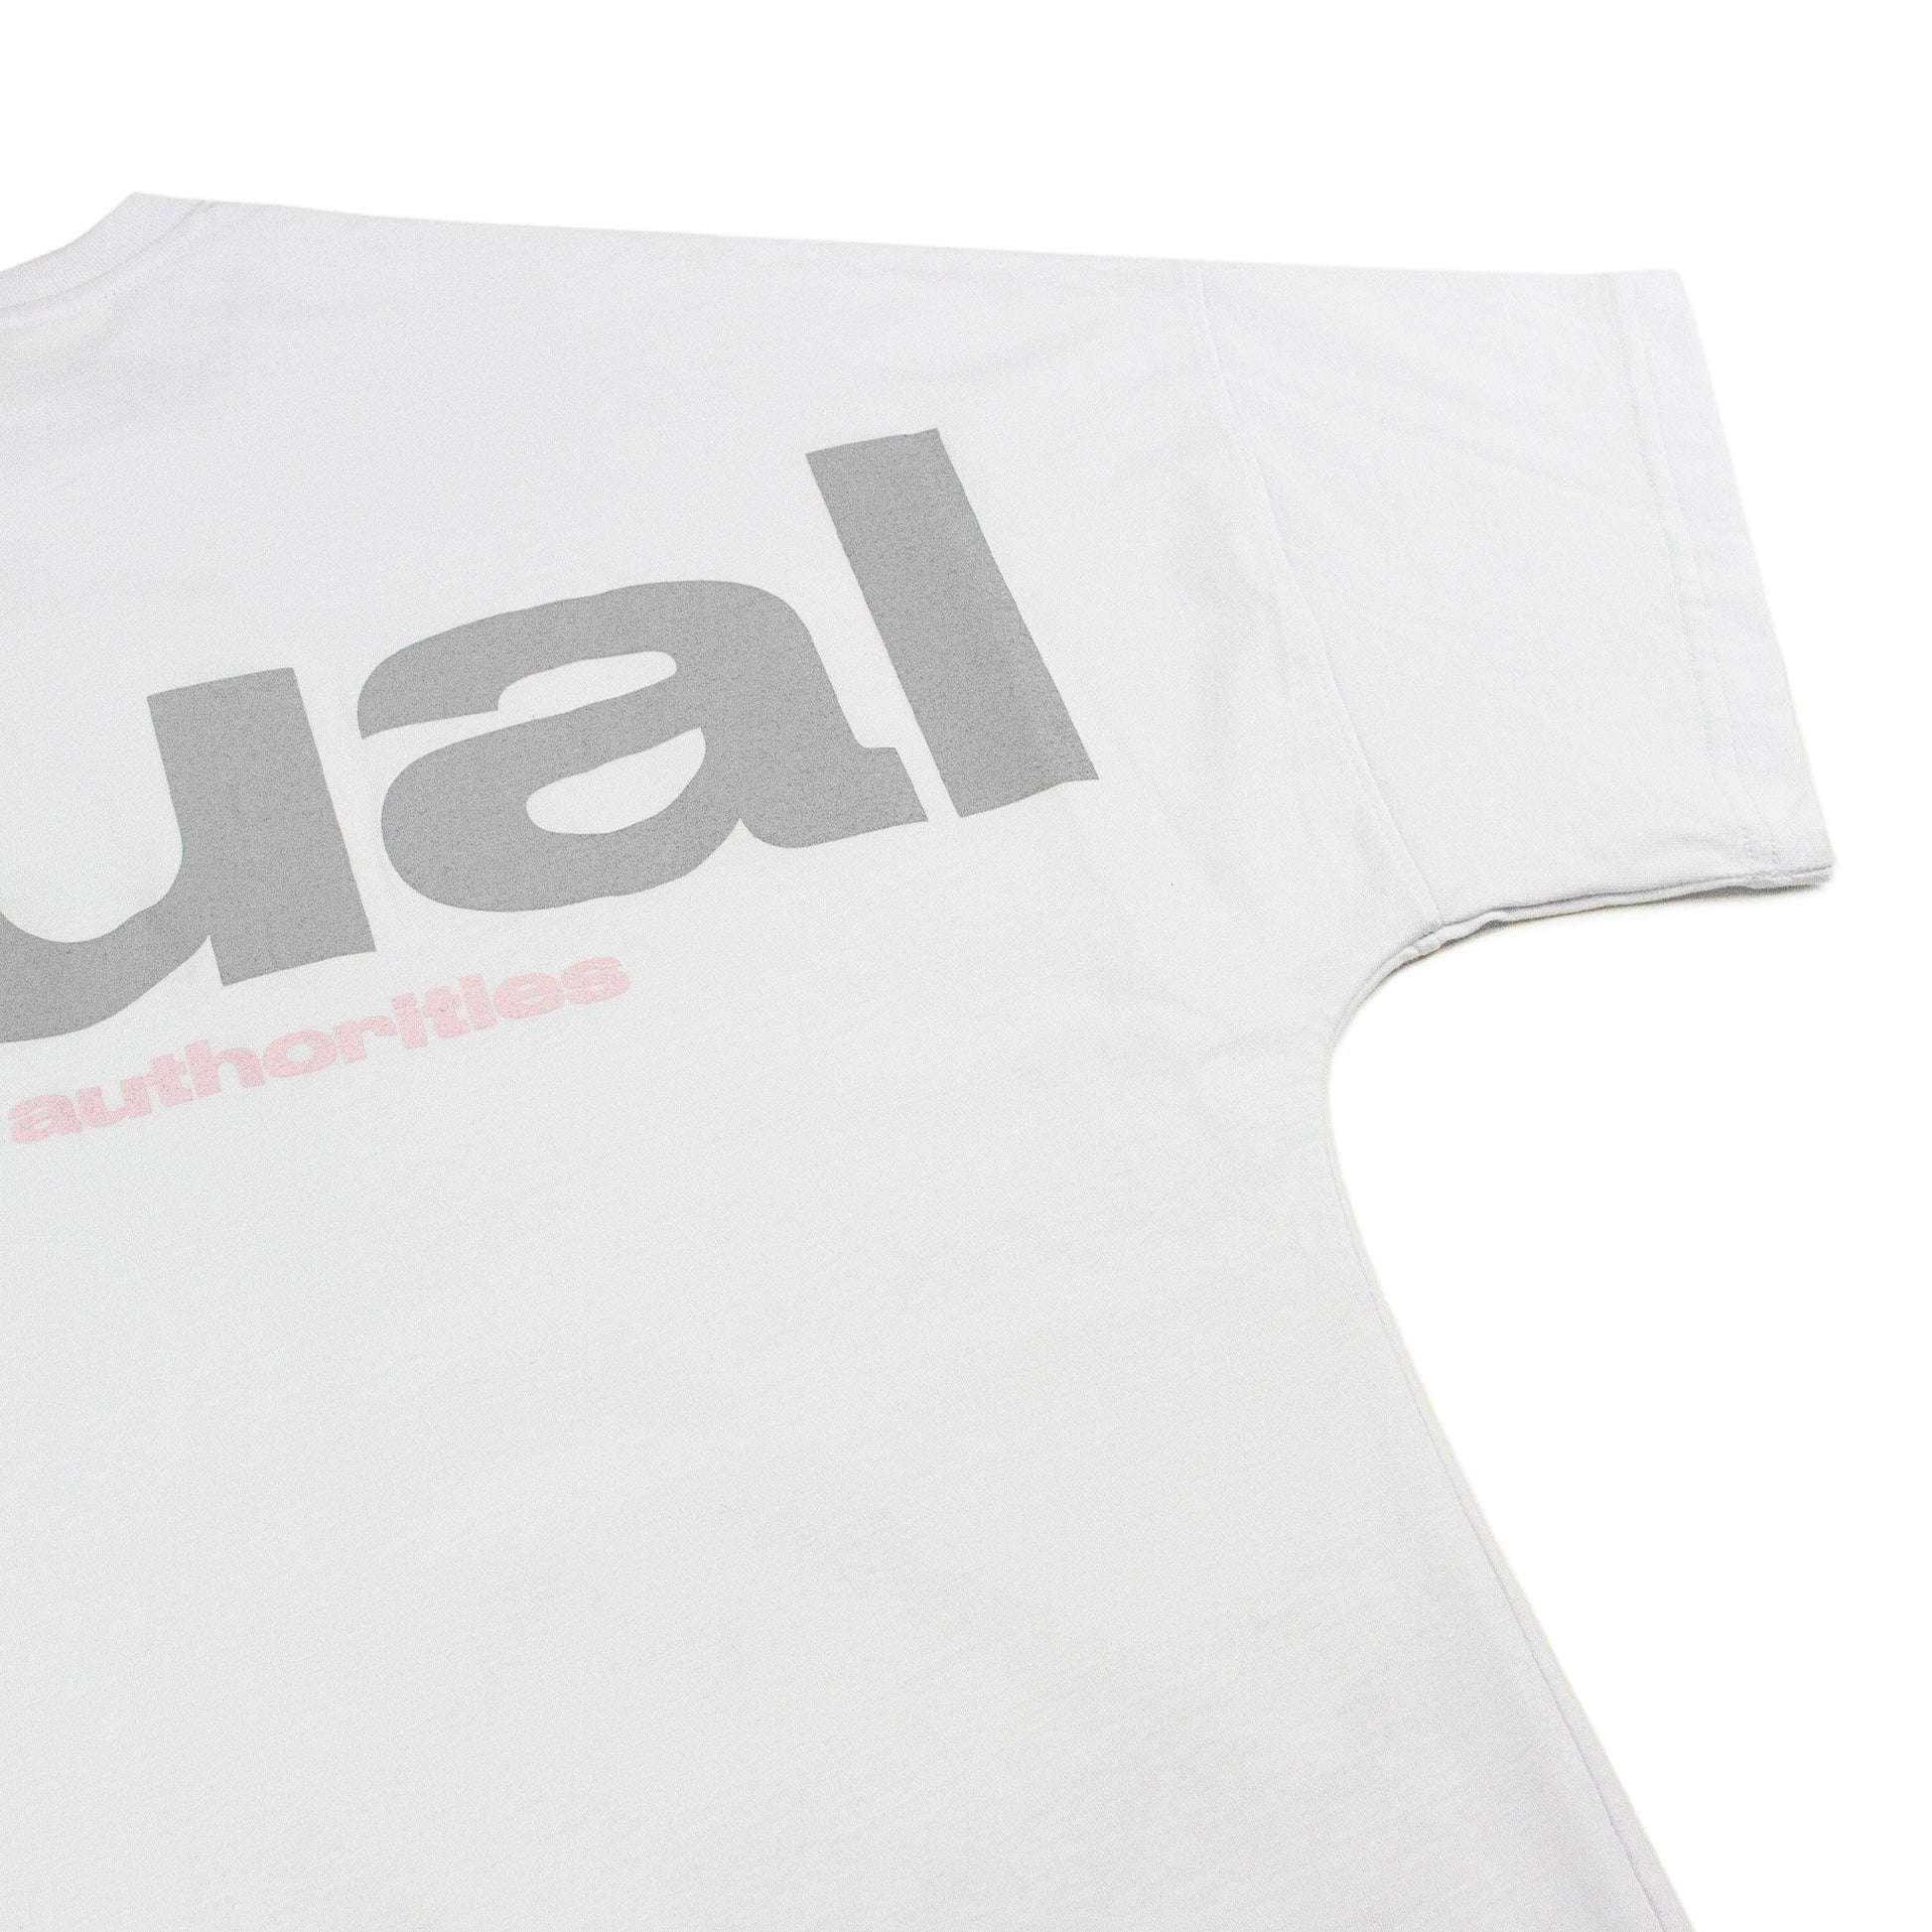 Usual - Giga T-Shirt White